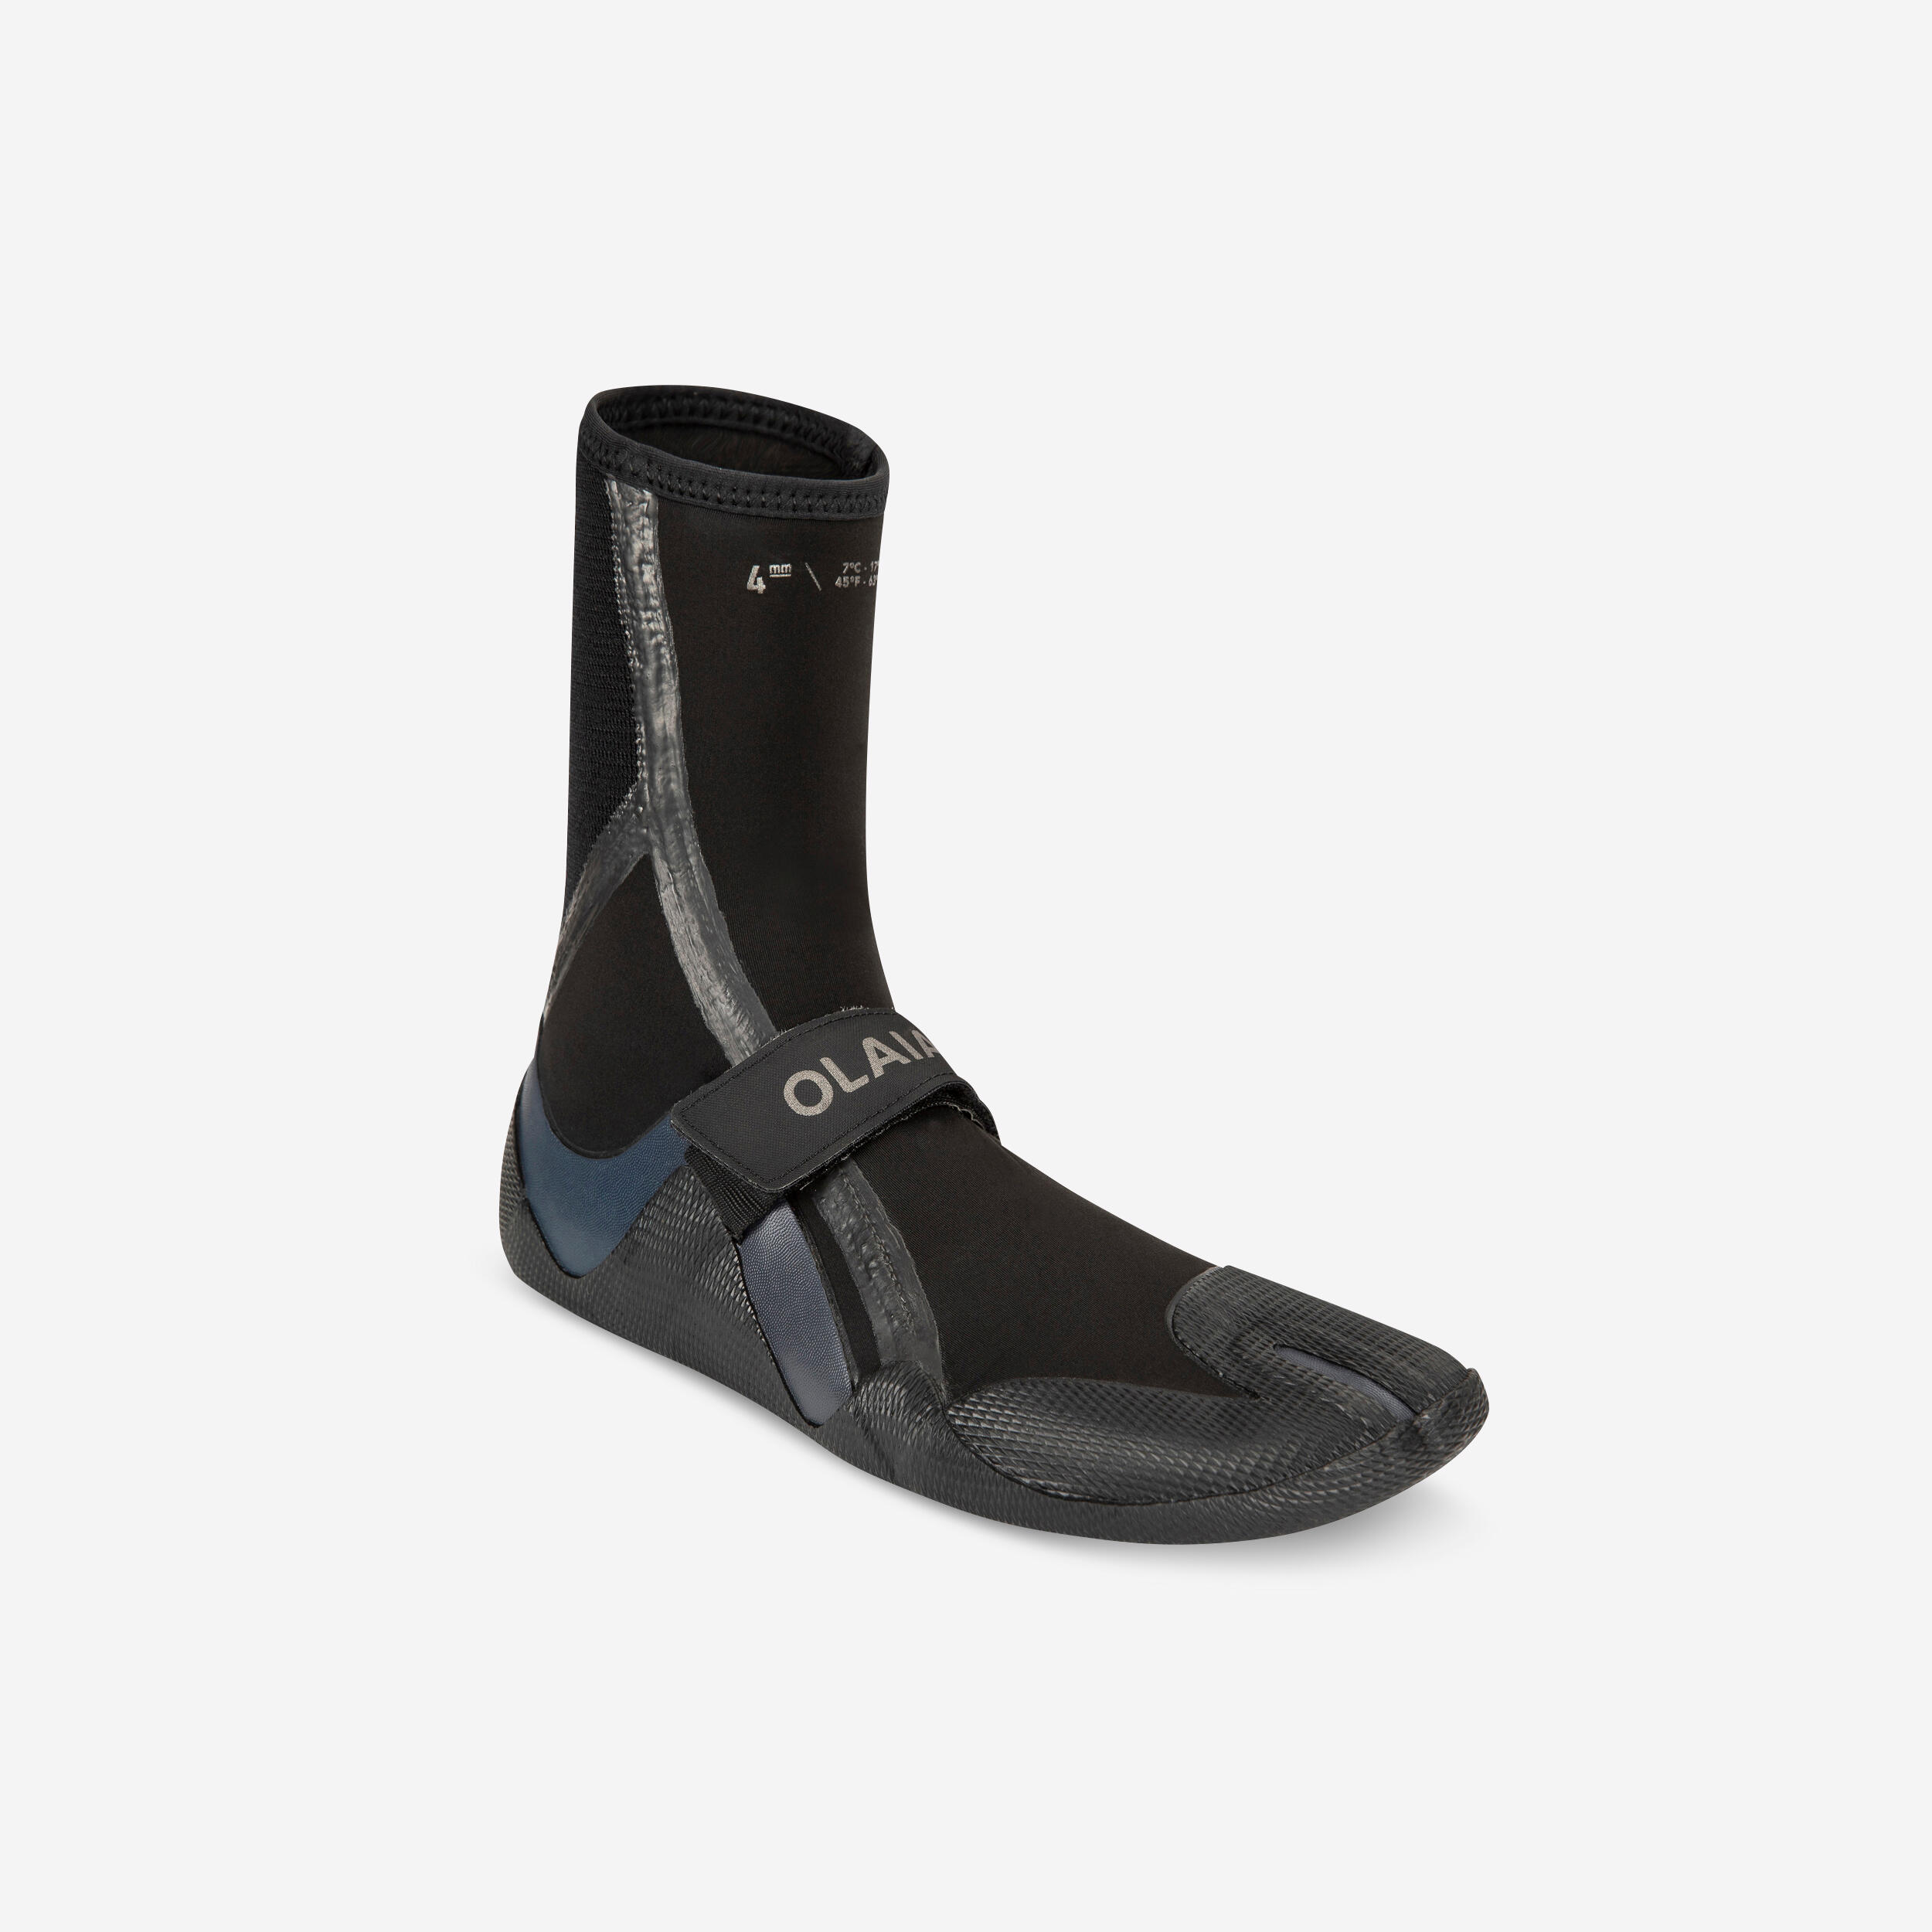 OLAIAN Neoprene surfing boots booties 900 4 mm - black/grey